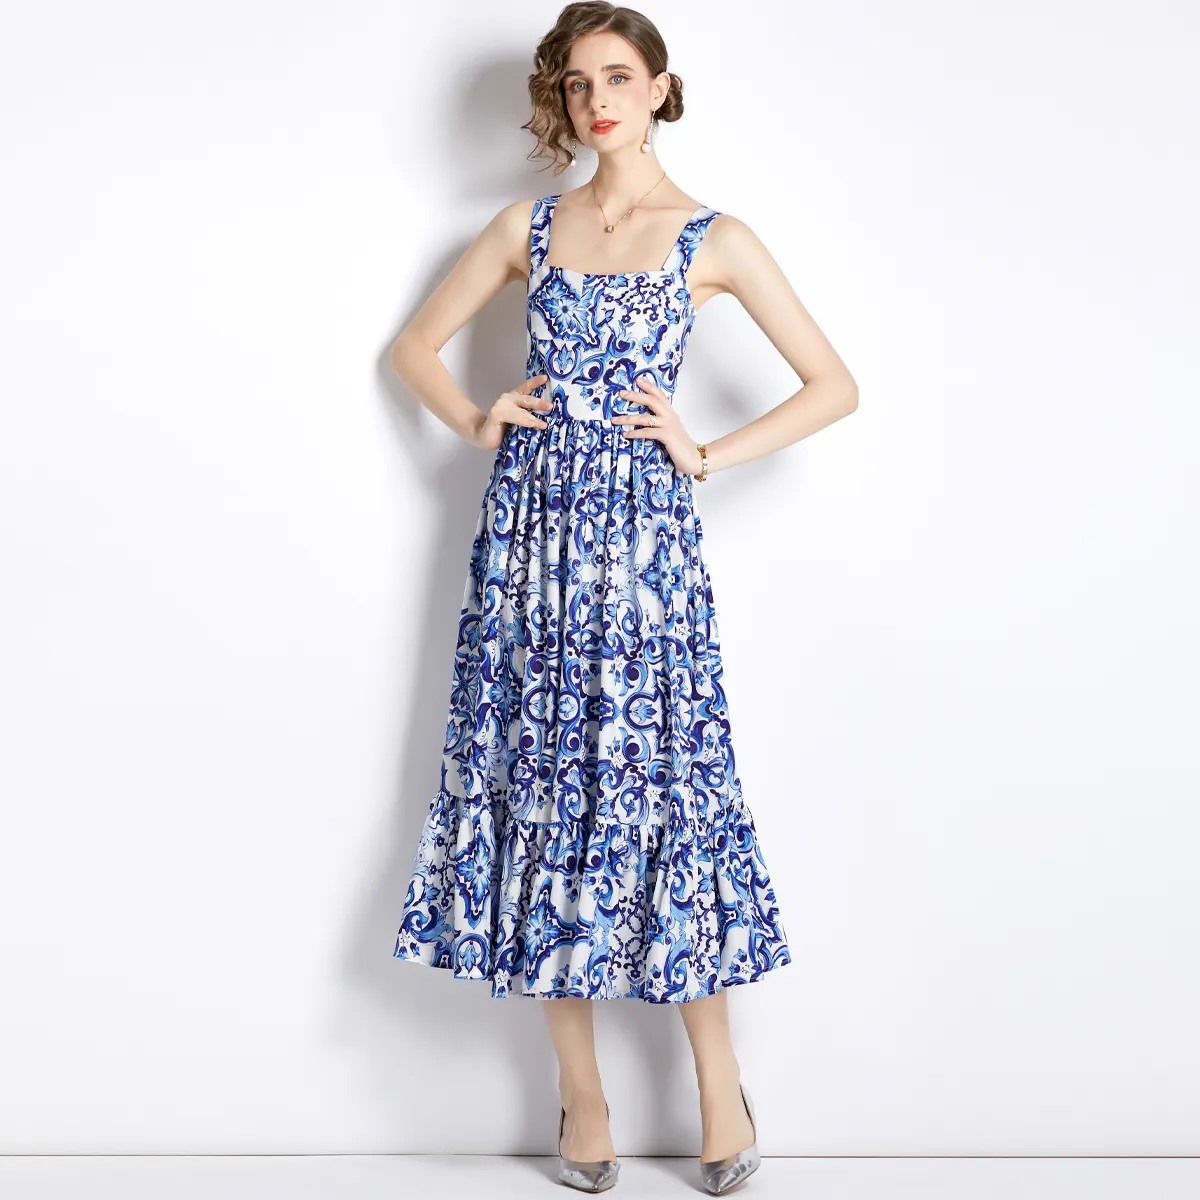 European Style Blue Majolica Print Pleat Dress Women Big Swing Vintage Slip Dress Lady Casual Evening Dress